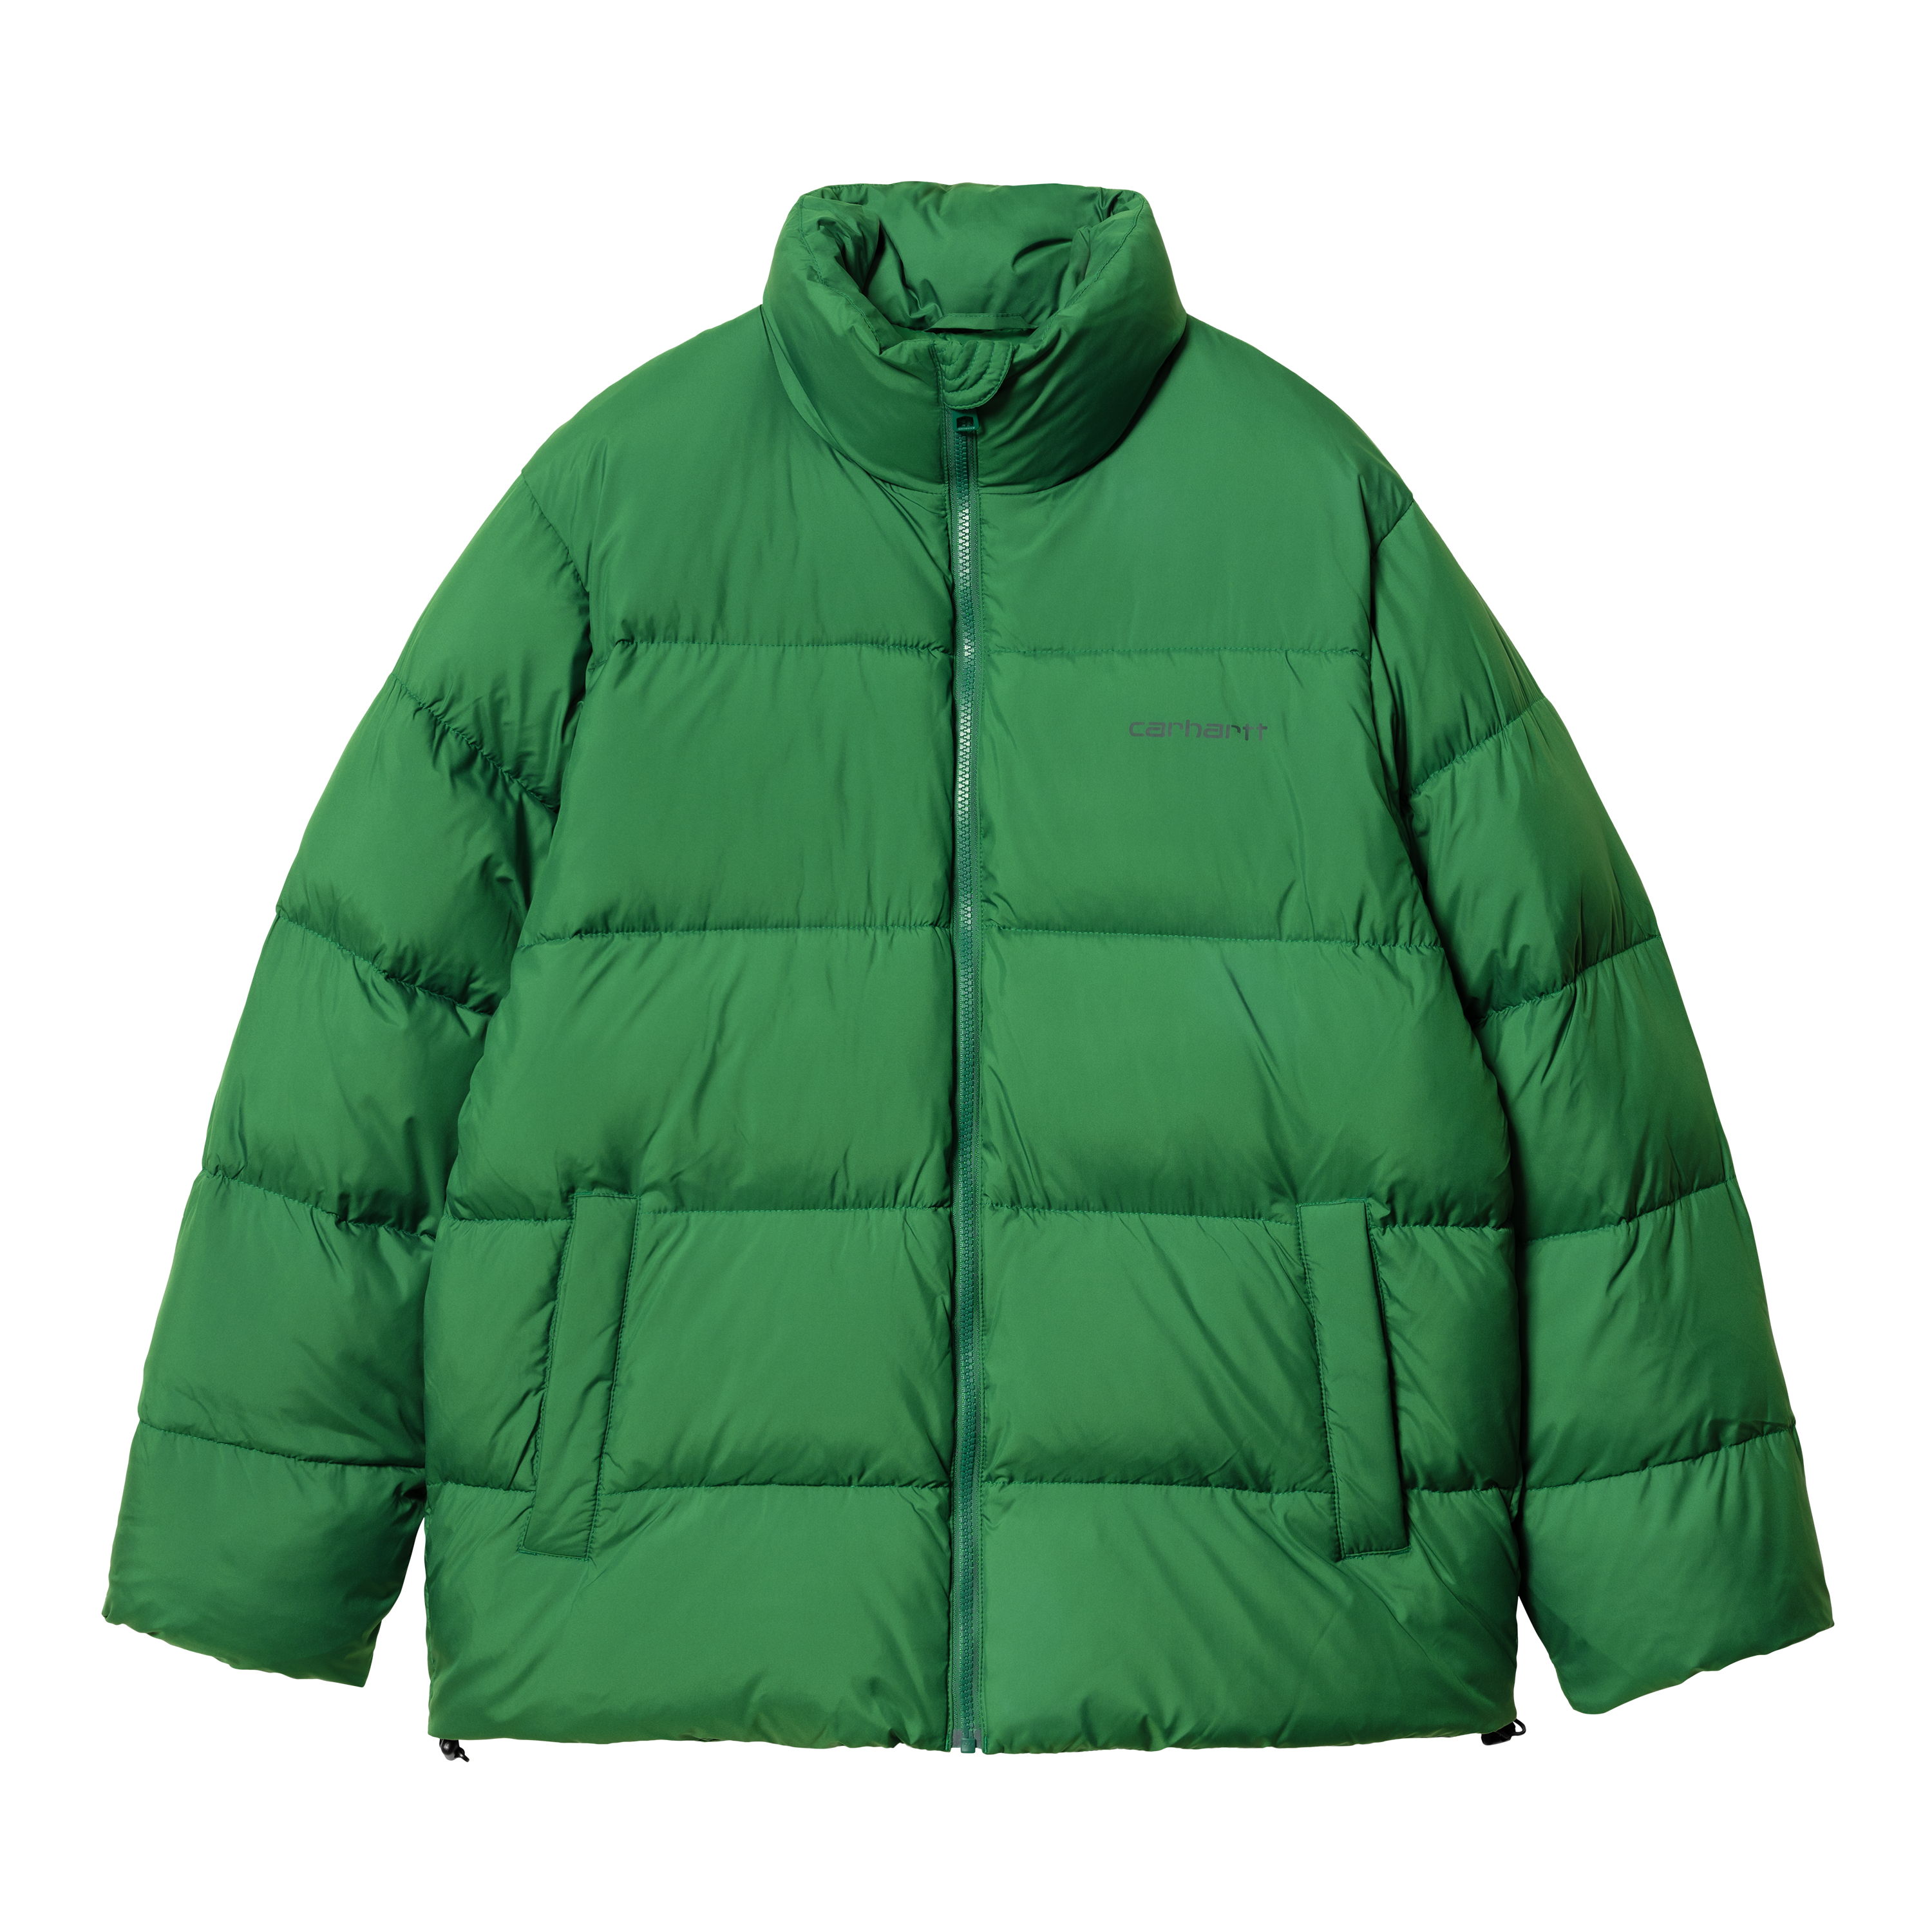 Buy Carhartt WIP Jackson Sweat Jacket 'Green' - I029566 GREE